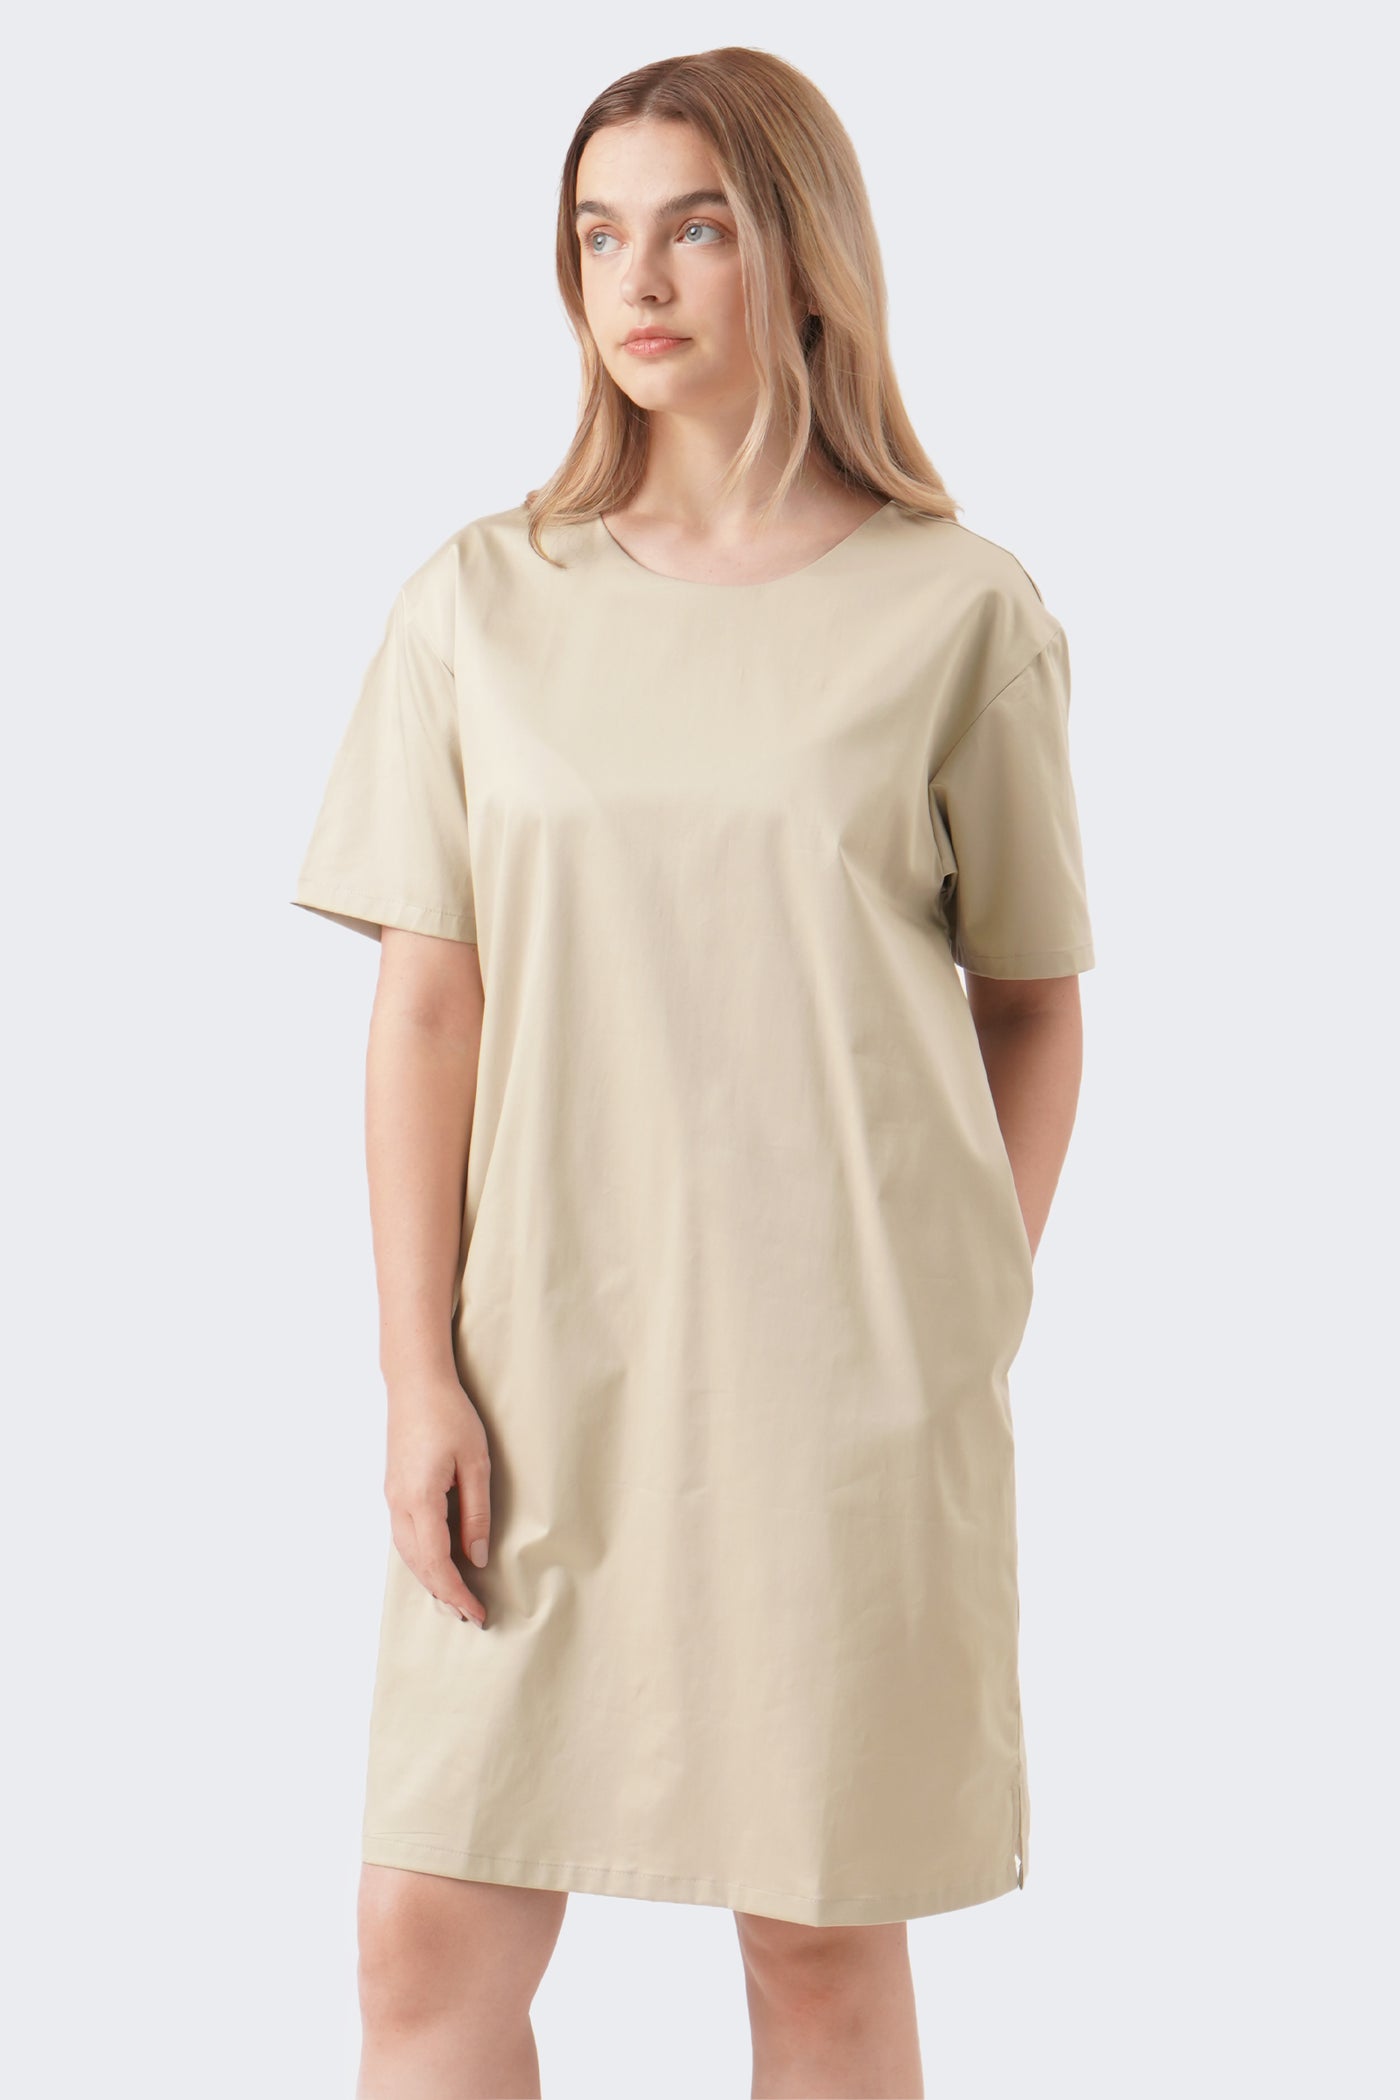 Women's Short Sleeve Mini A-Line Dress